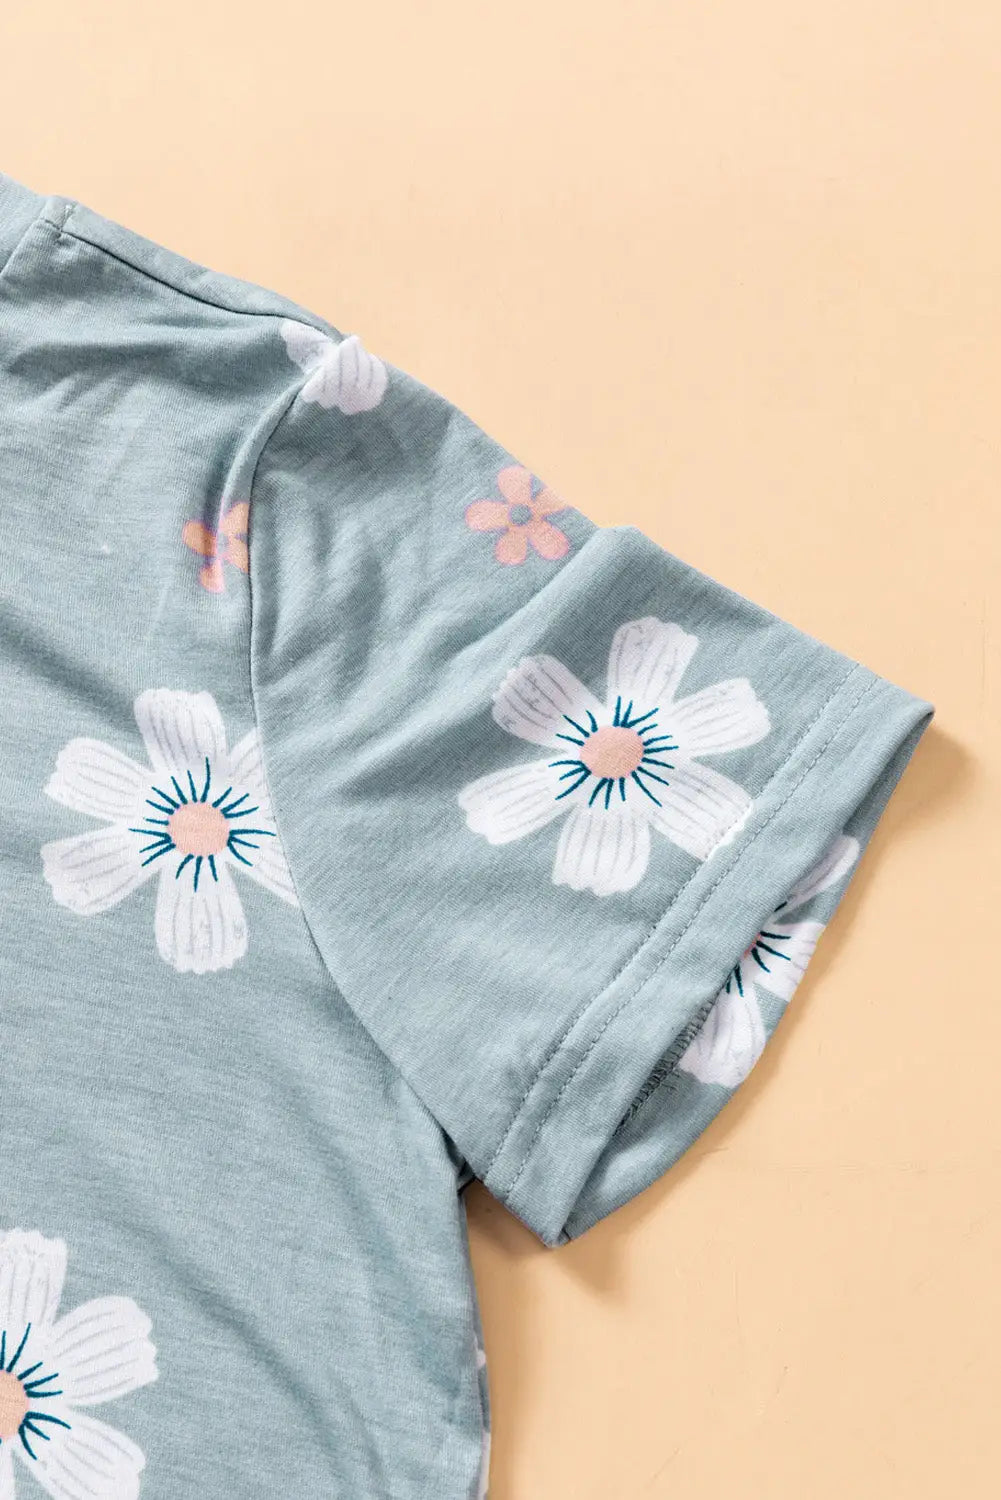 Gray floral pattern t-shirt - t-shirts